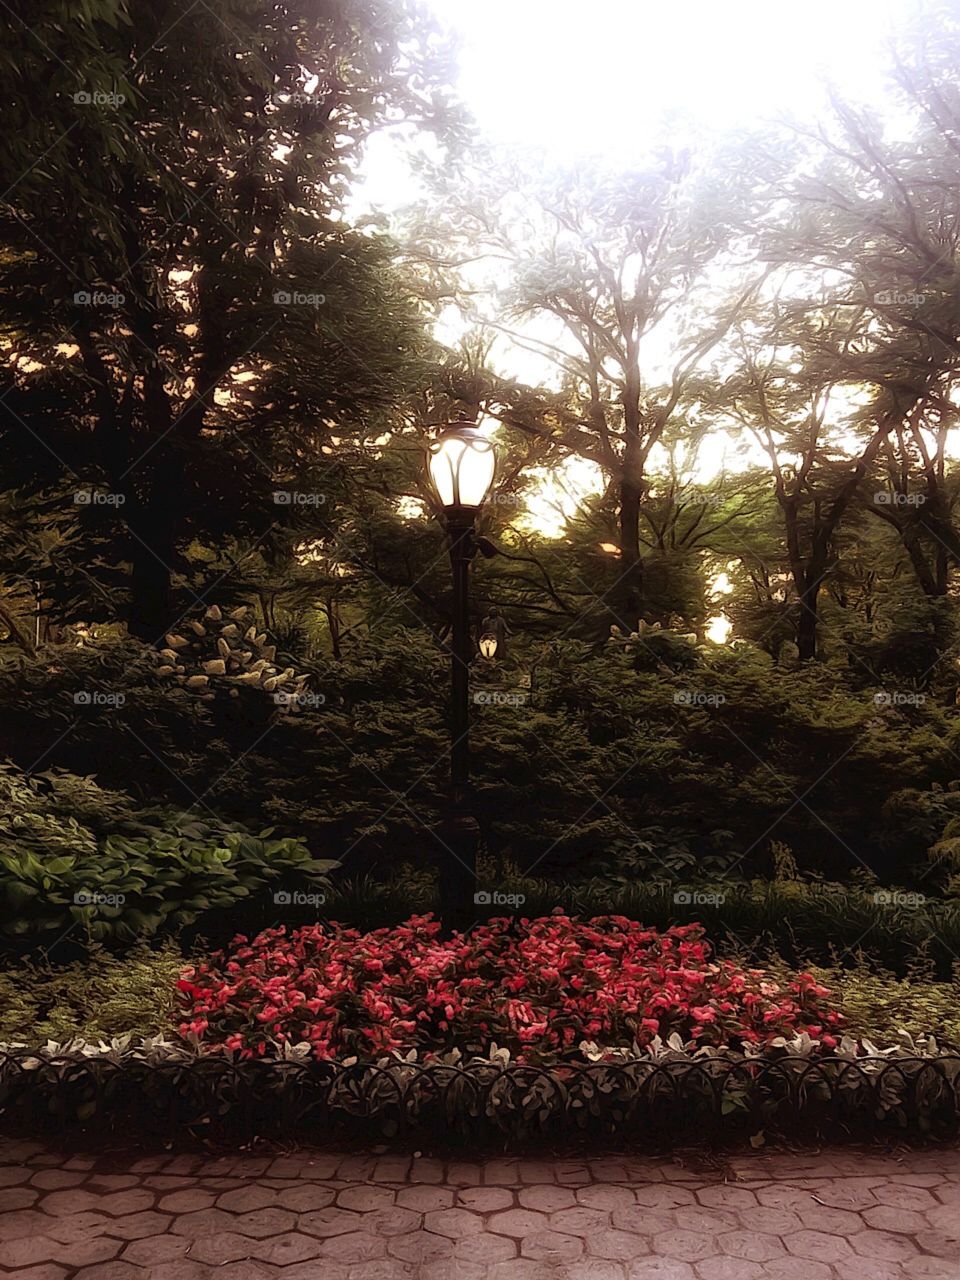 Olmsted Flower Bed- Central Park, New York City. Instagram,@PennyPeronto